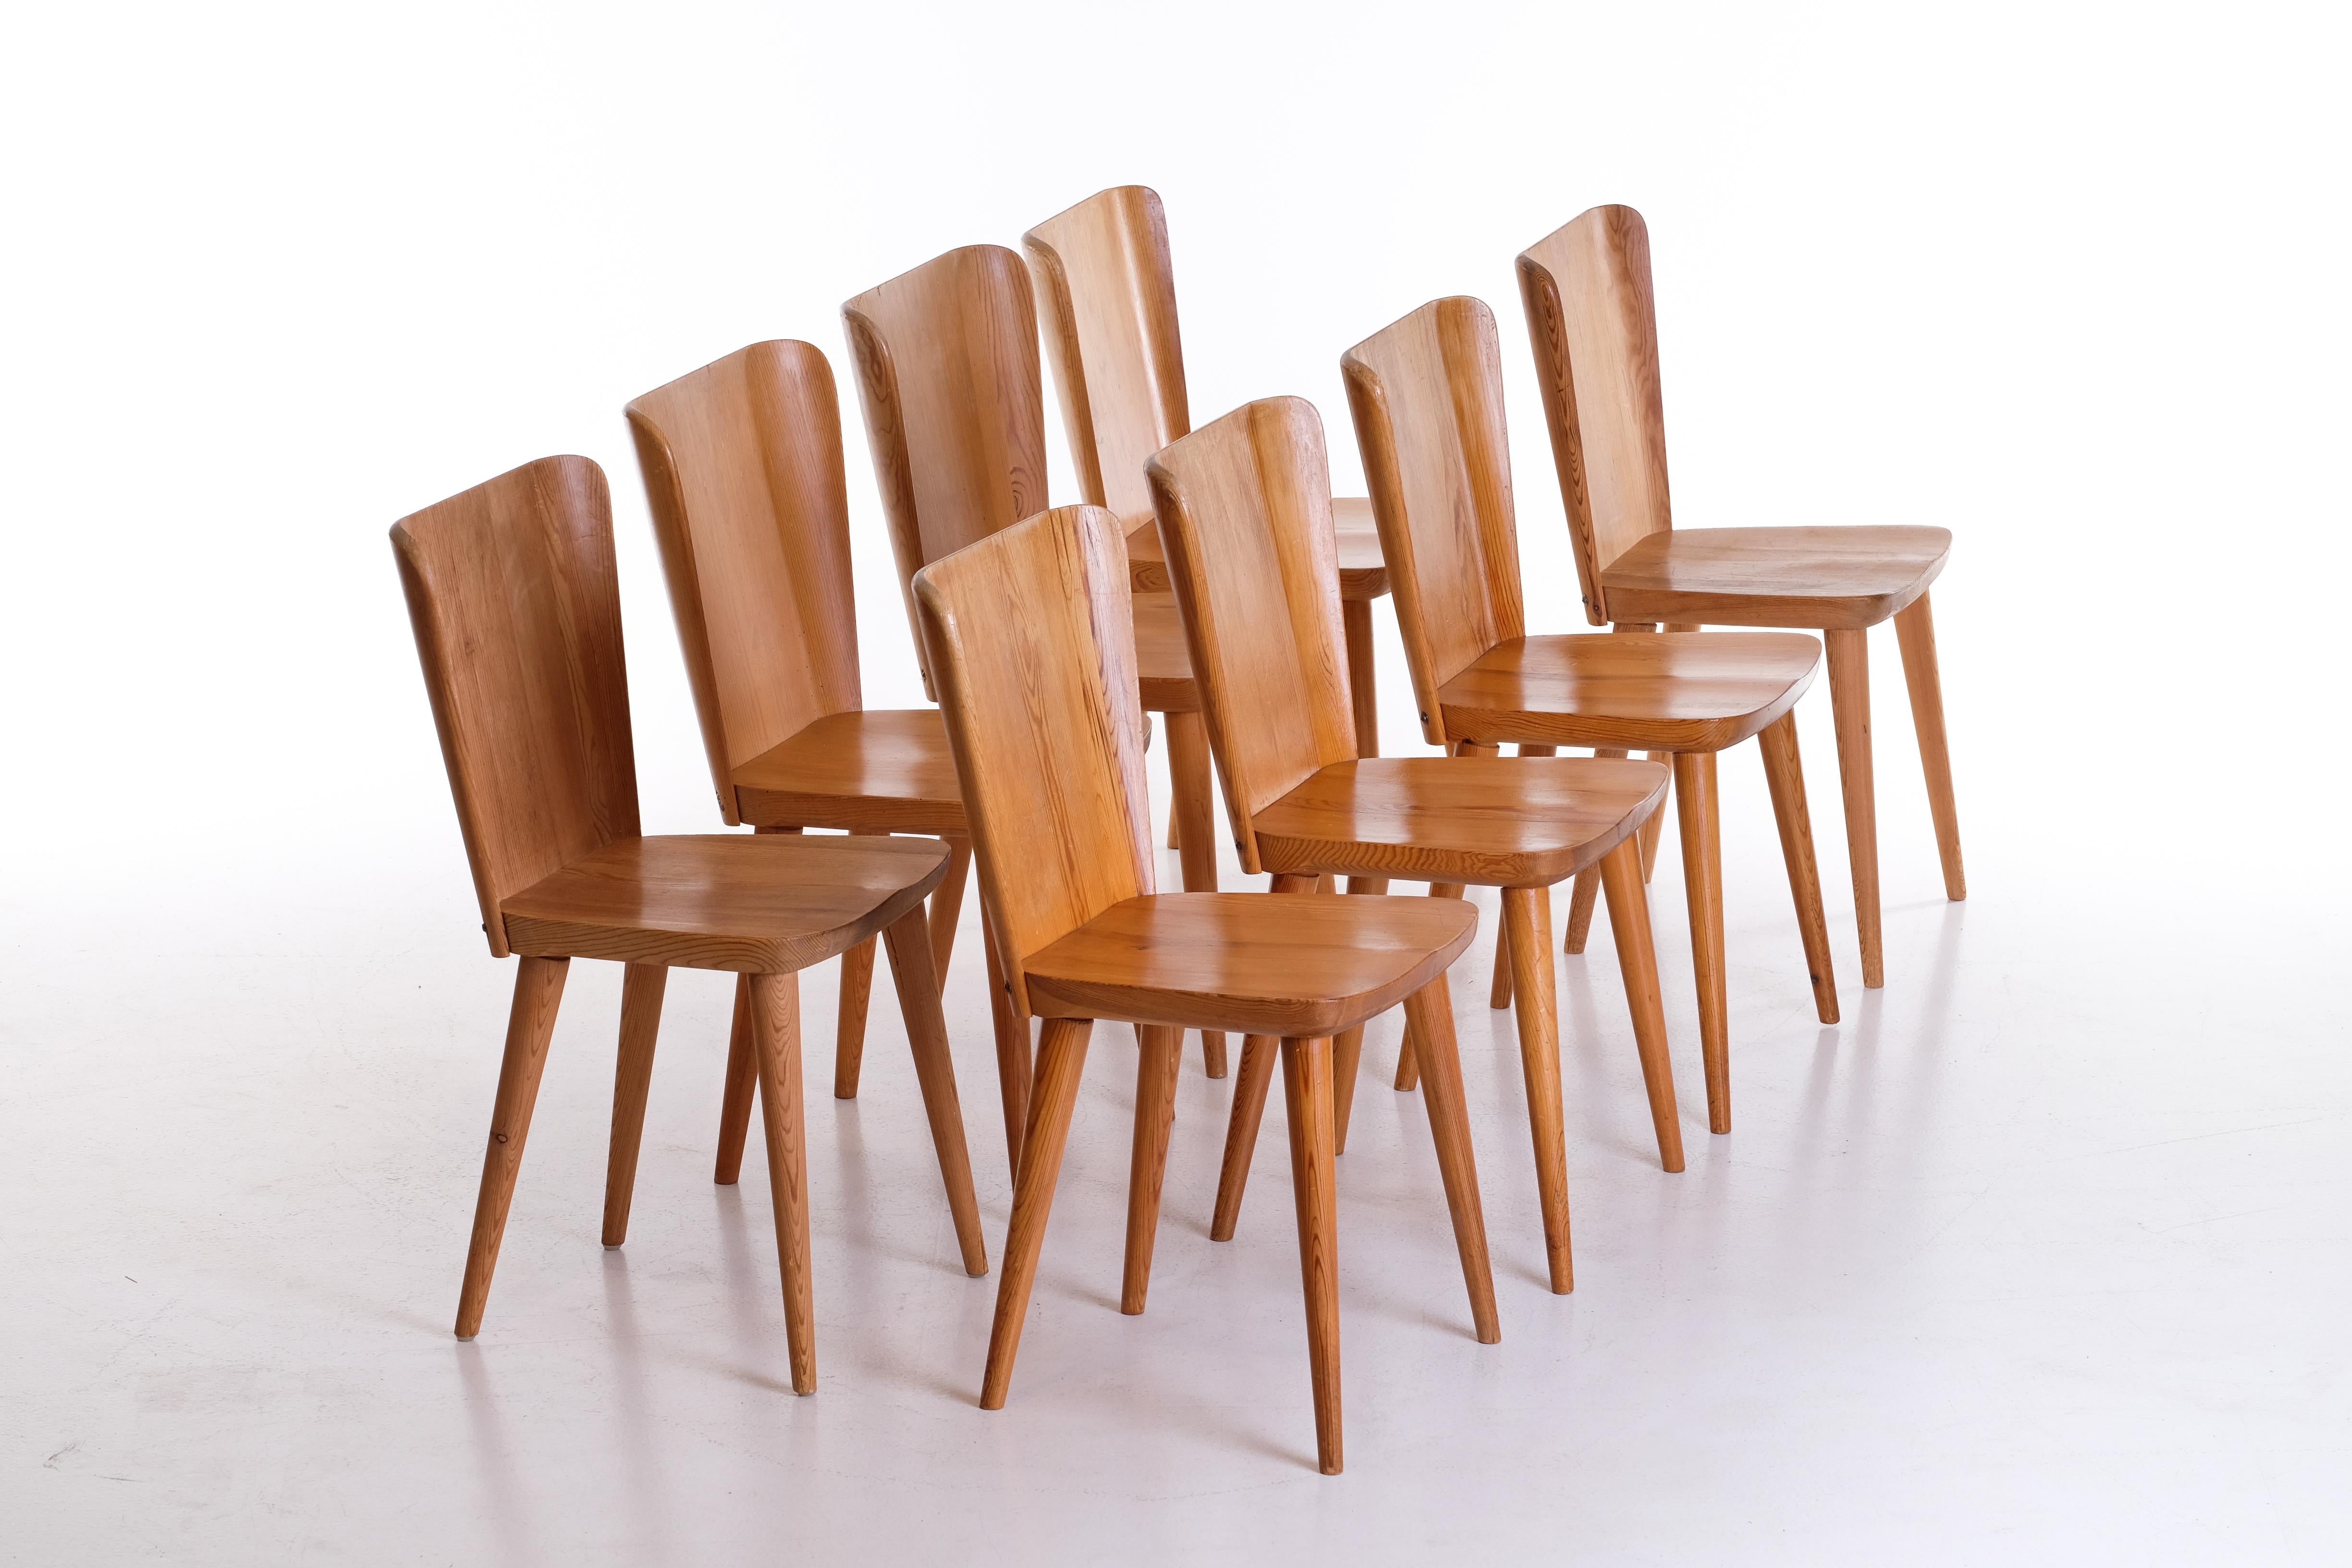 Set of 8 Swedish Pine Chairs by Göran Malmvall, Svensk Fur, 1950s For Sale 1